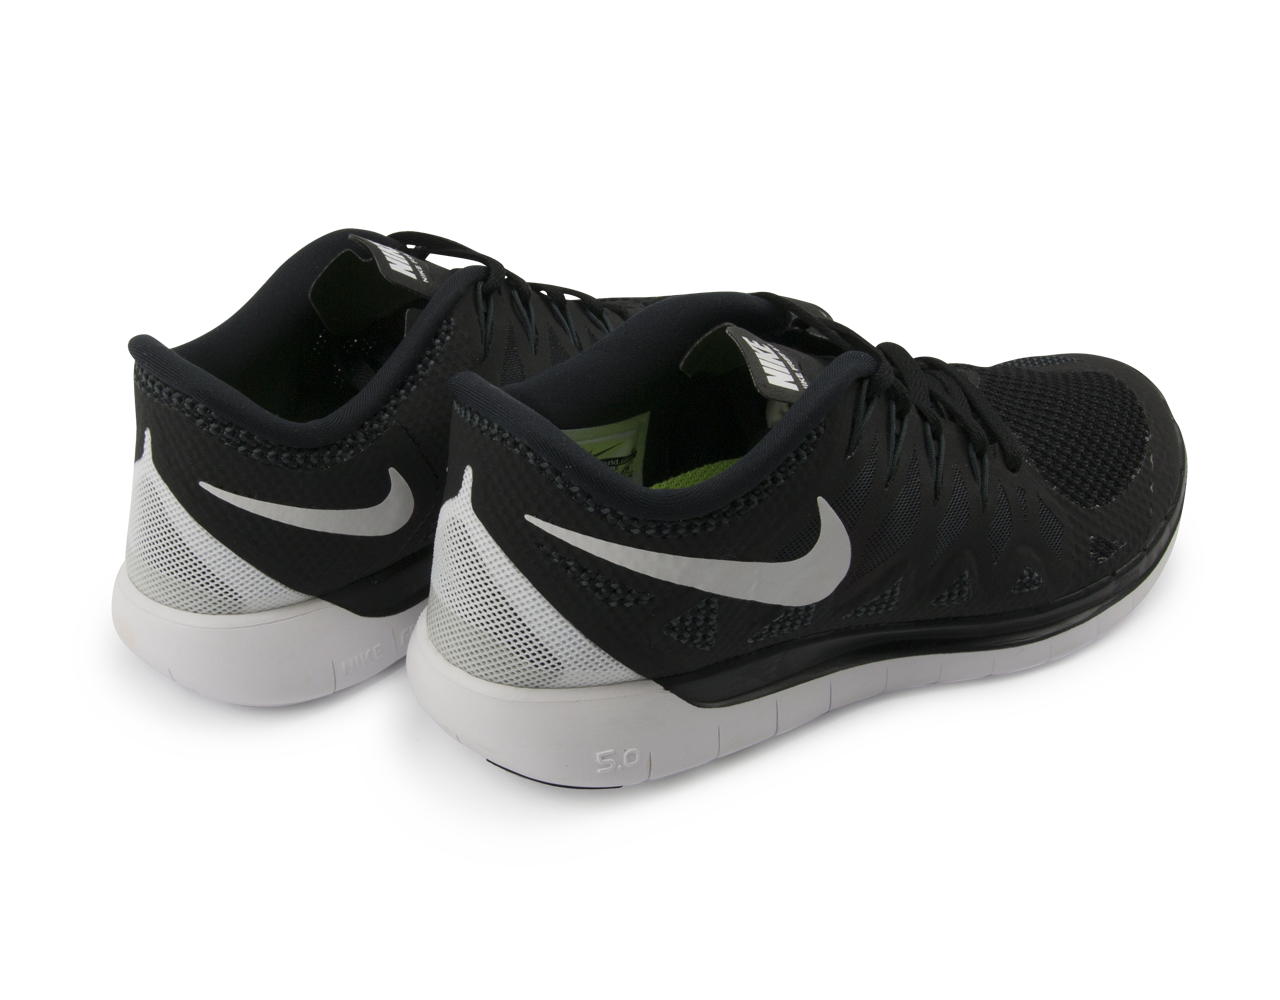 Nike Men's Free 5.0 Running Shoes Black/White/Anthracite